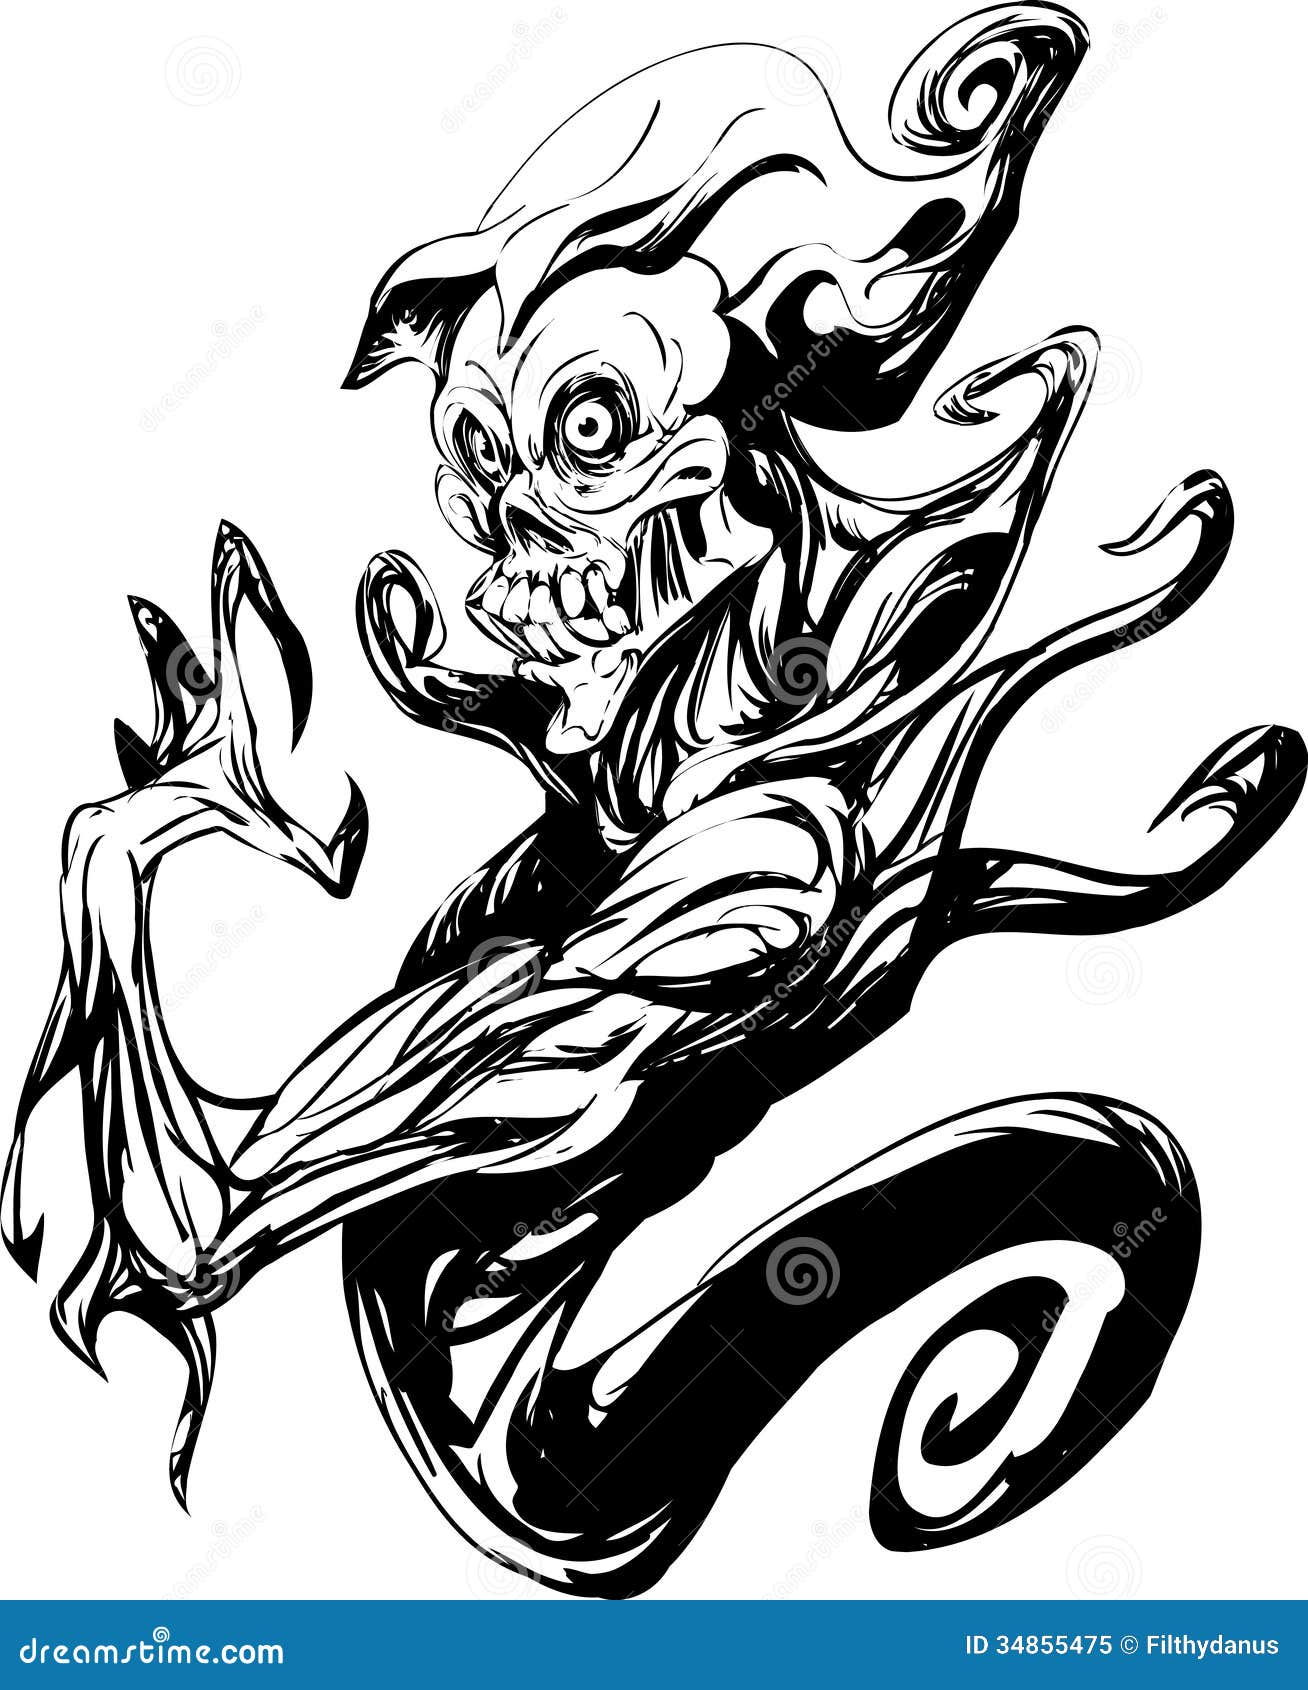 spirit ghost death tattoo sticker illustration Halloween scary creepy  horror crazy devil 30036200 Stock Photo at Vecteezy